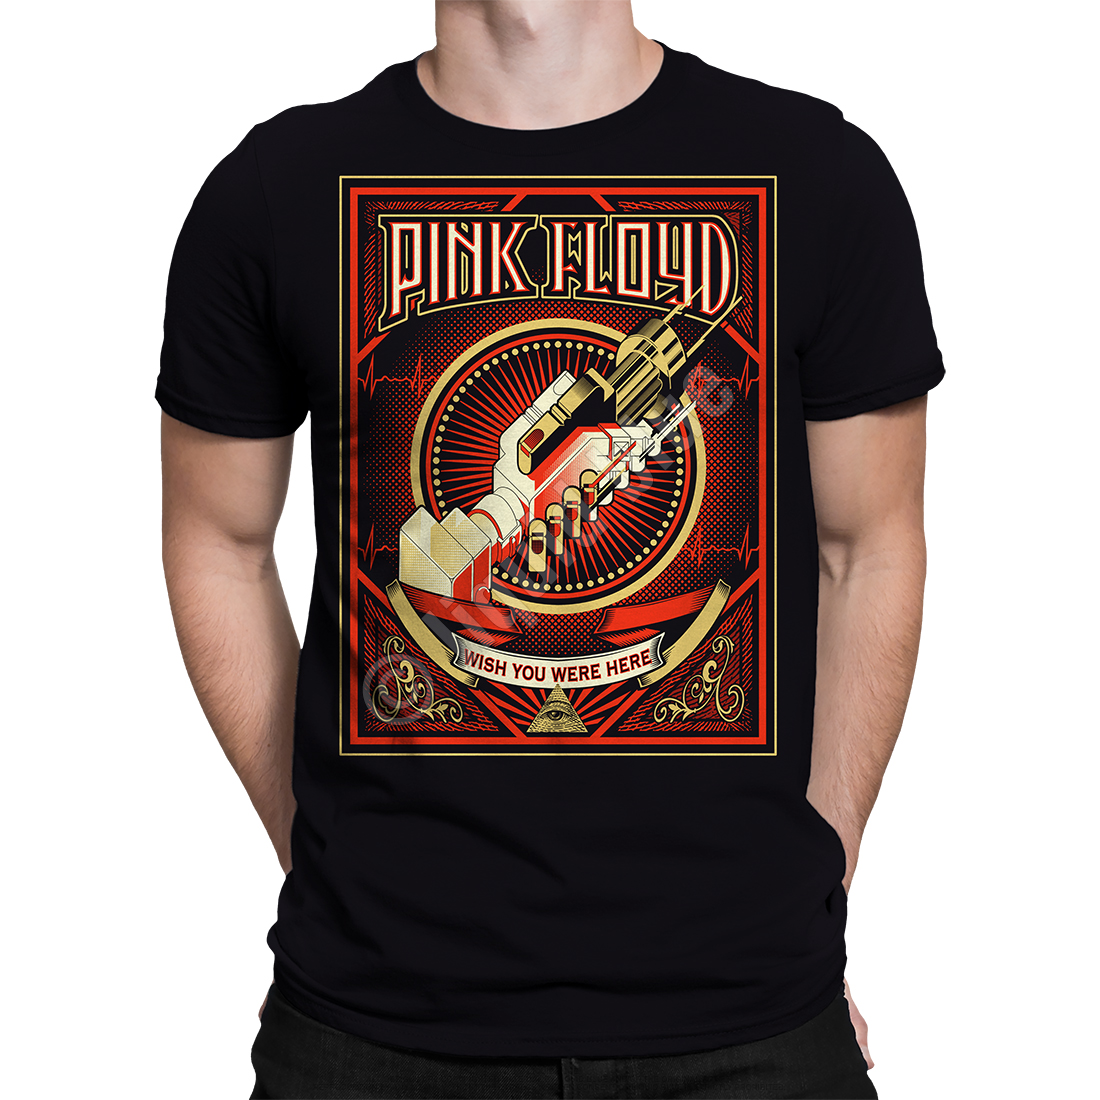 T-Shirt Tee Blue Pink Were Wish Floyd Liquid You Black Here